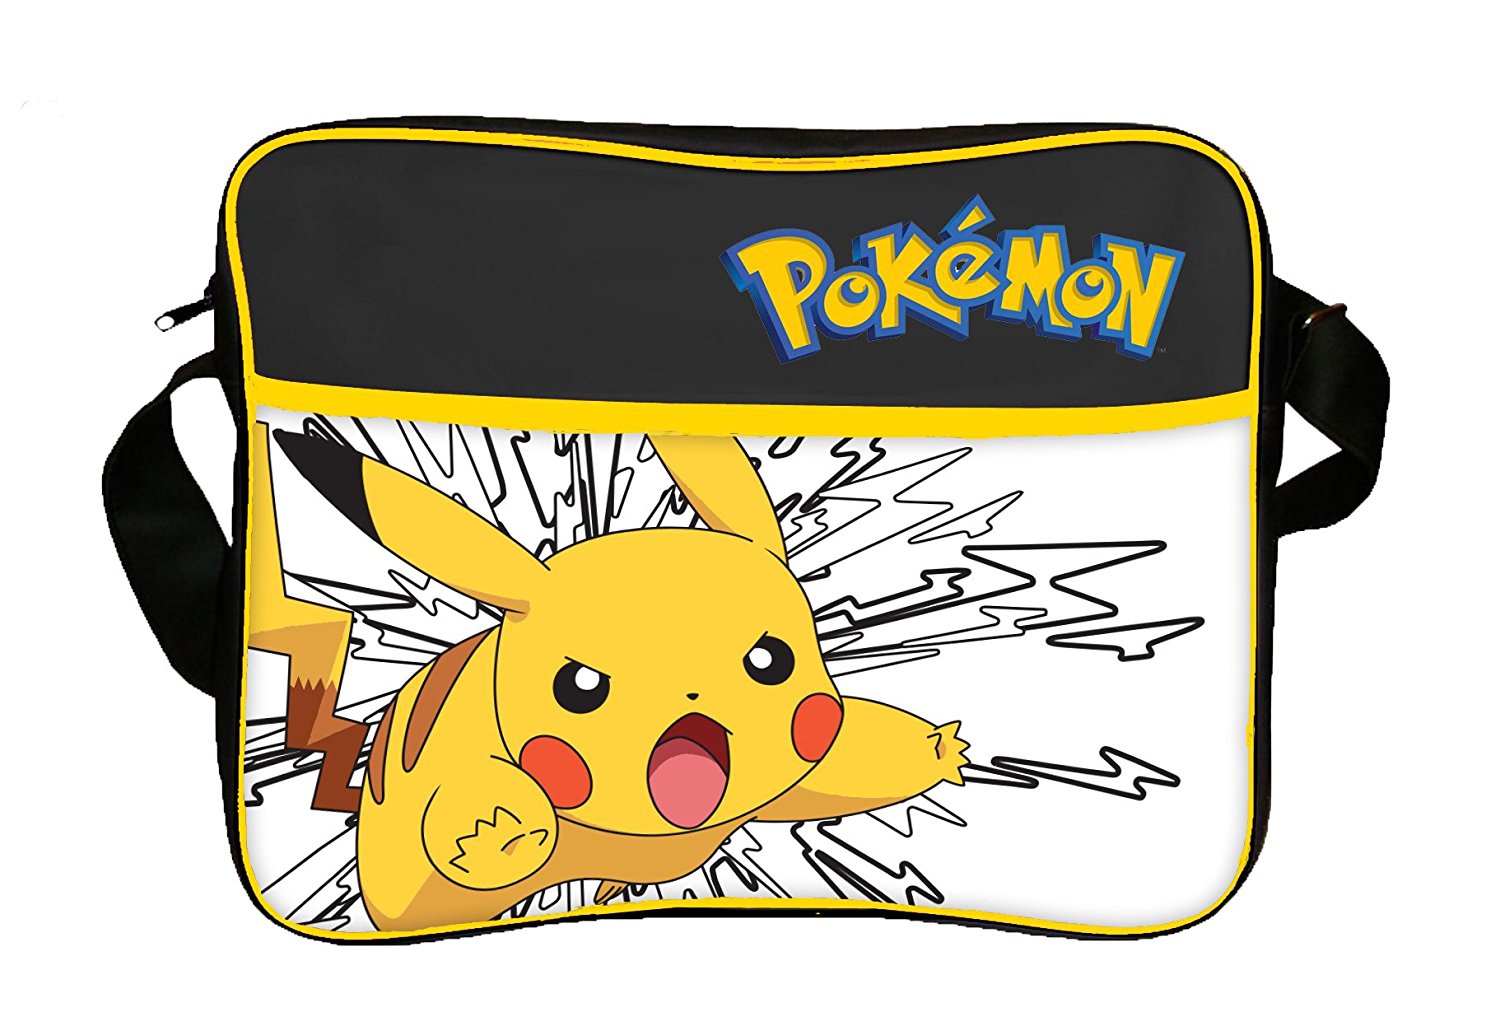 Pokemon 'Pikachu' School Despatch Bag